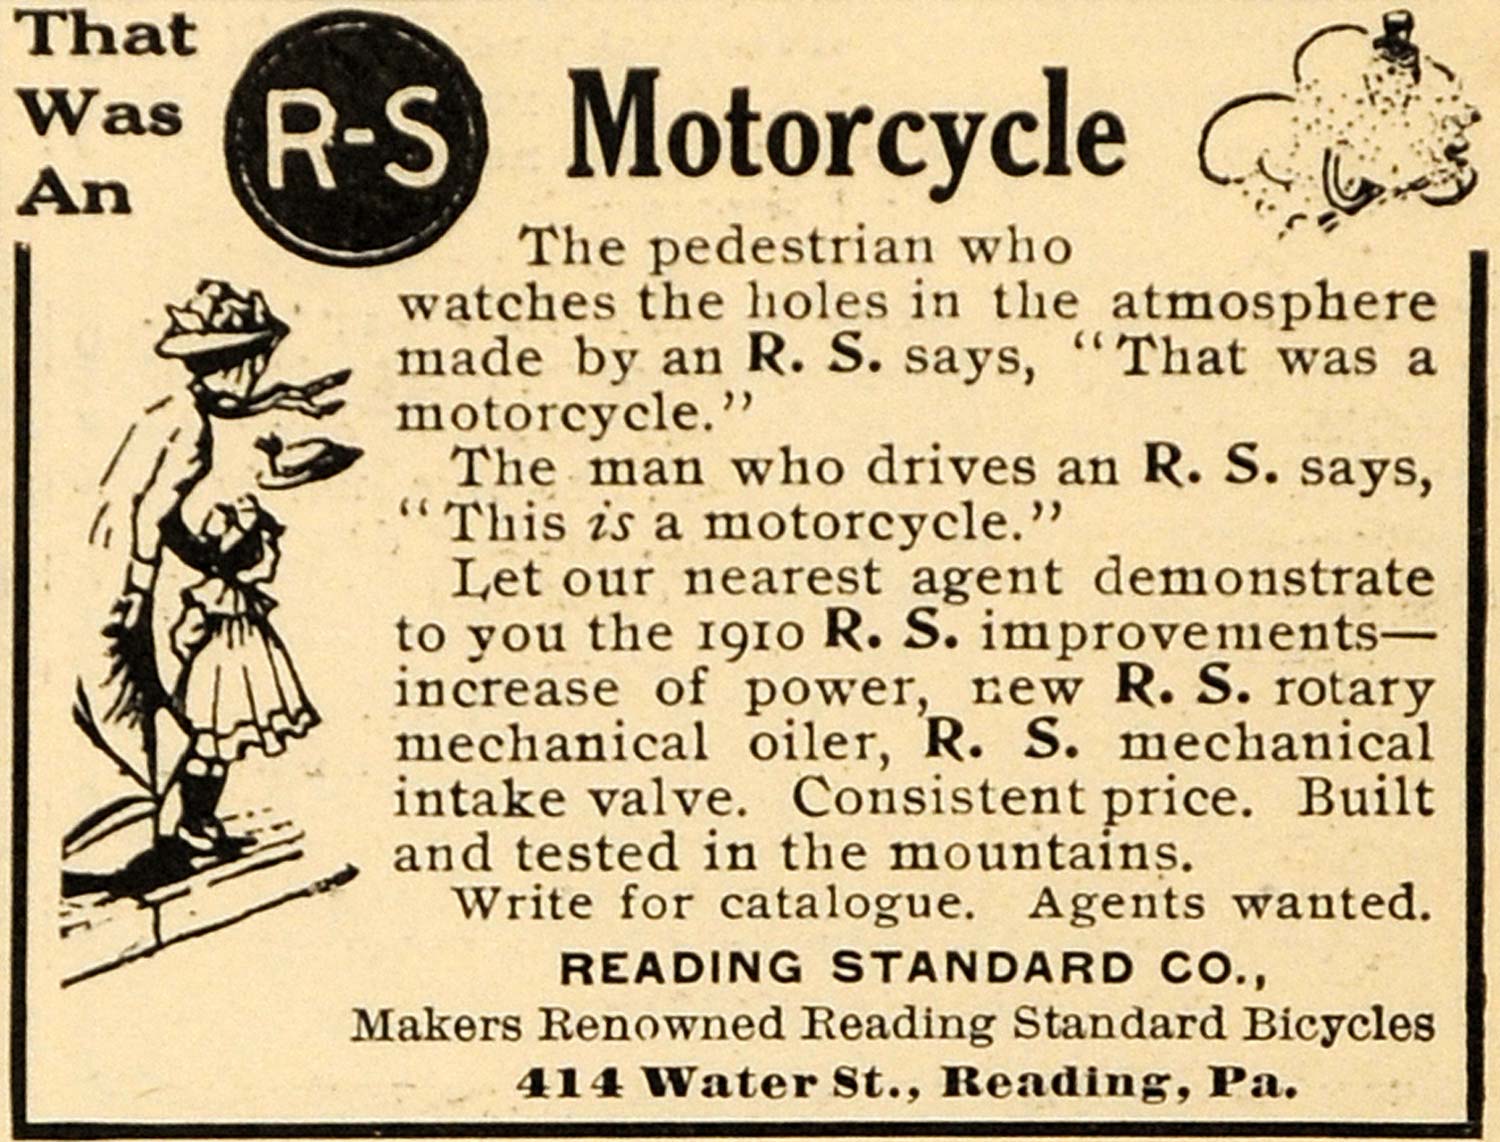 1910 Ad Reading Standard Co Motorcycle R-S Pennsylvania - ORIGINAL ARG1